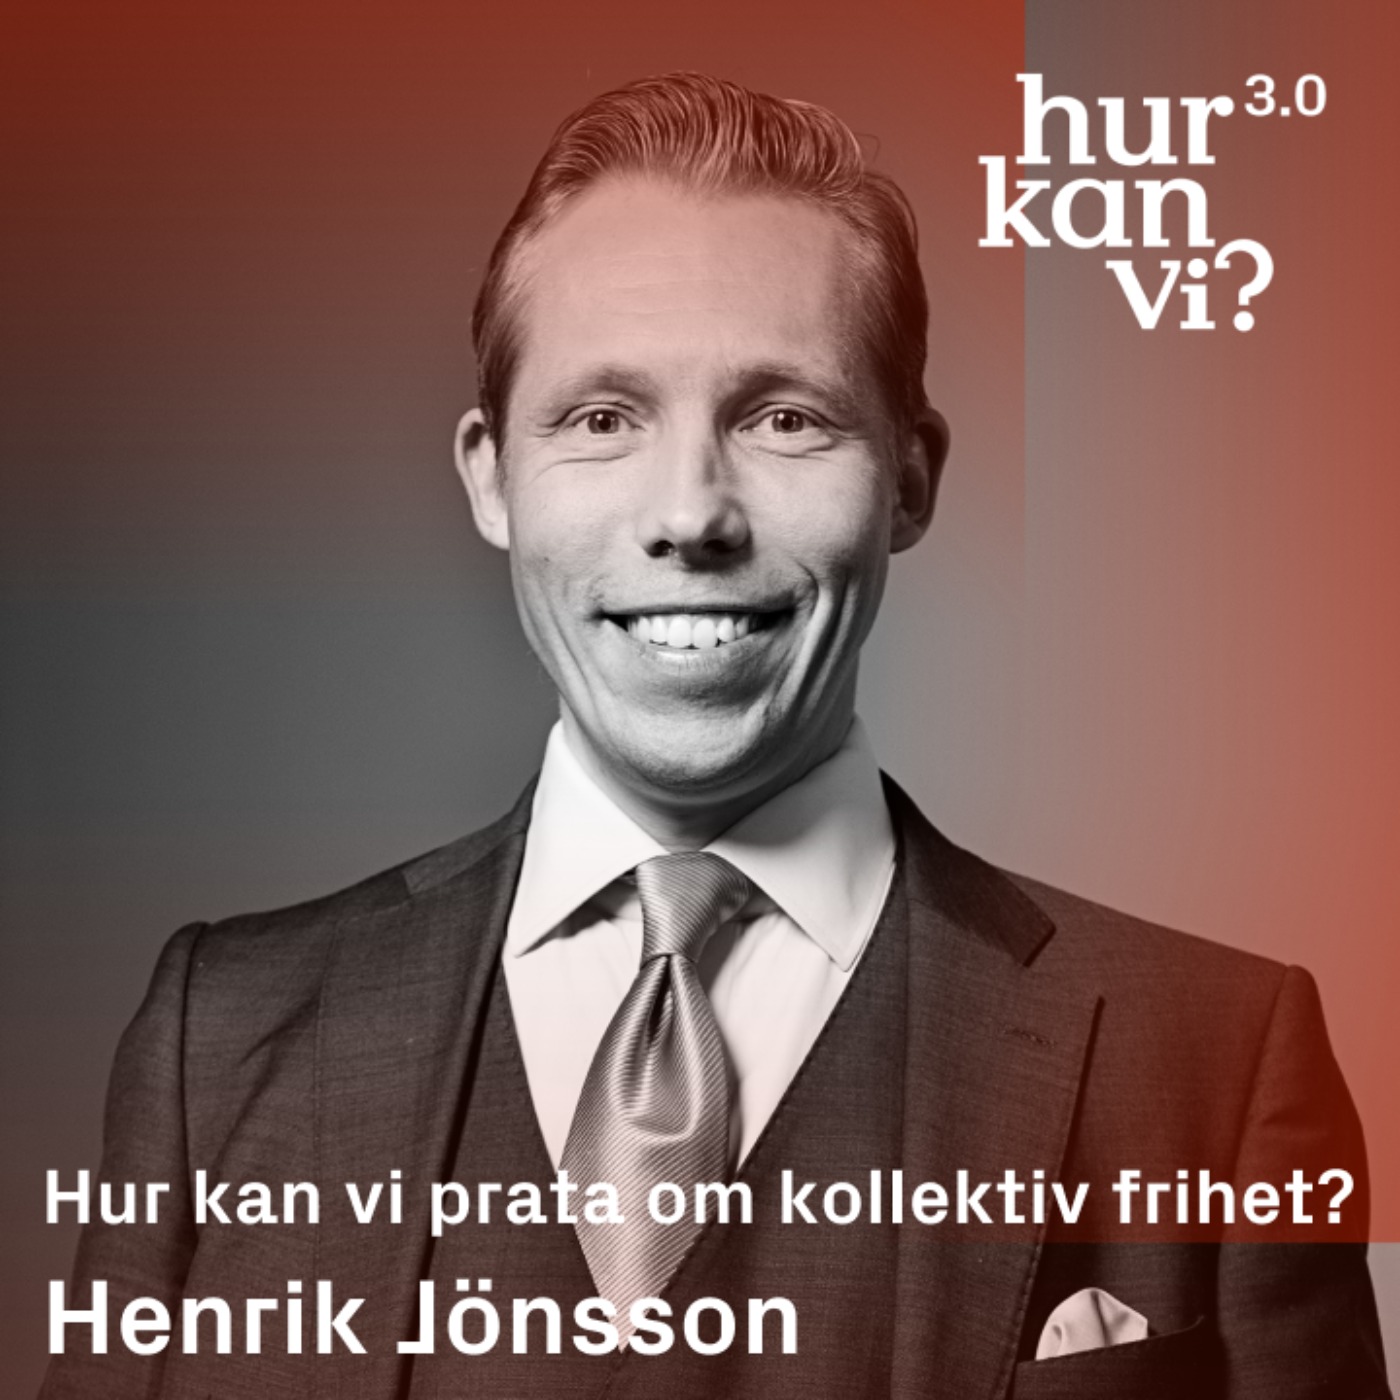 Henrik Jönsson - Hur kan vi prata om kollektiv frihet?